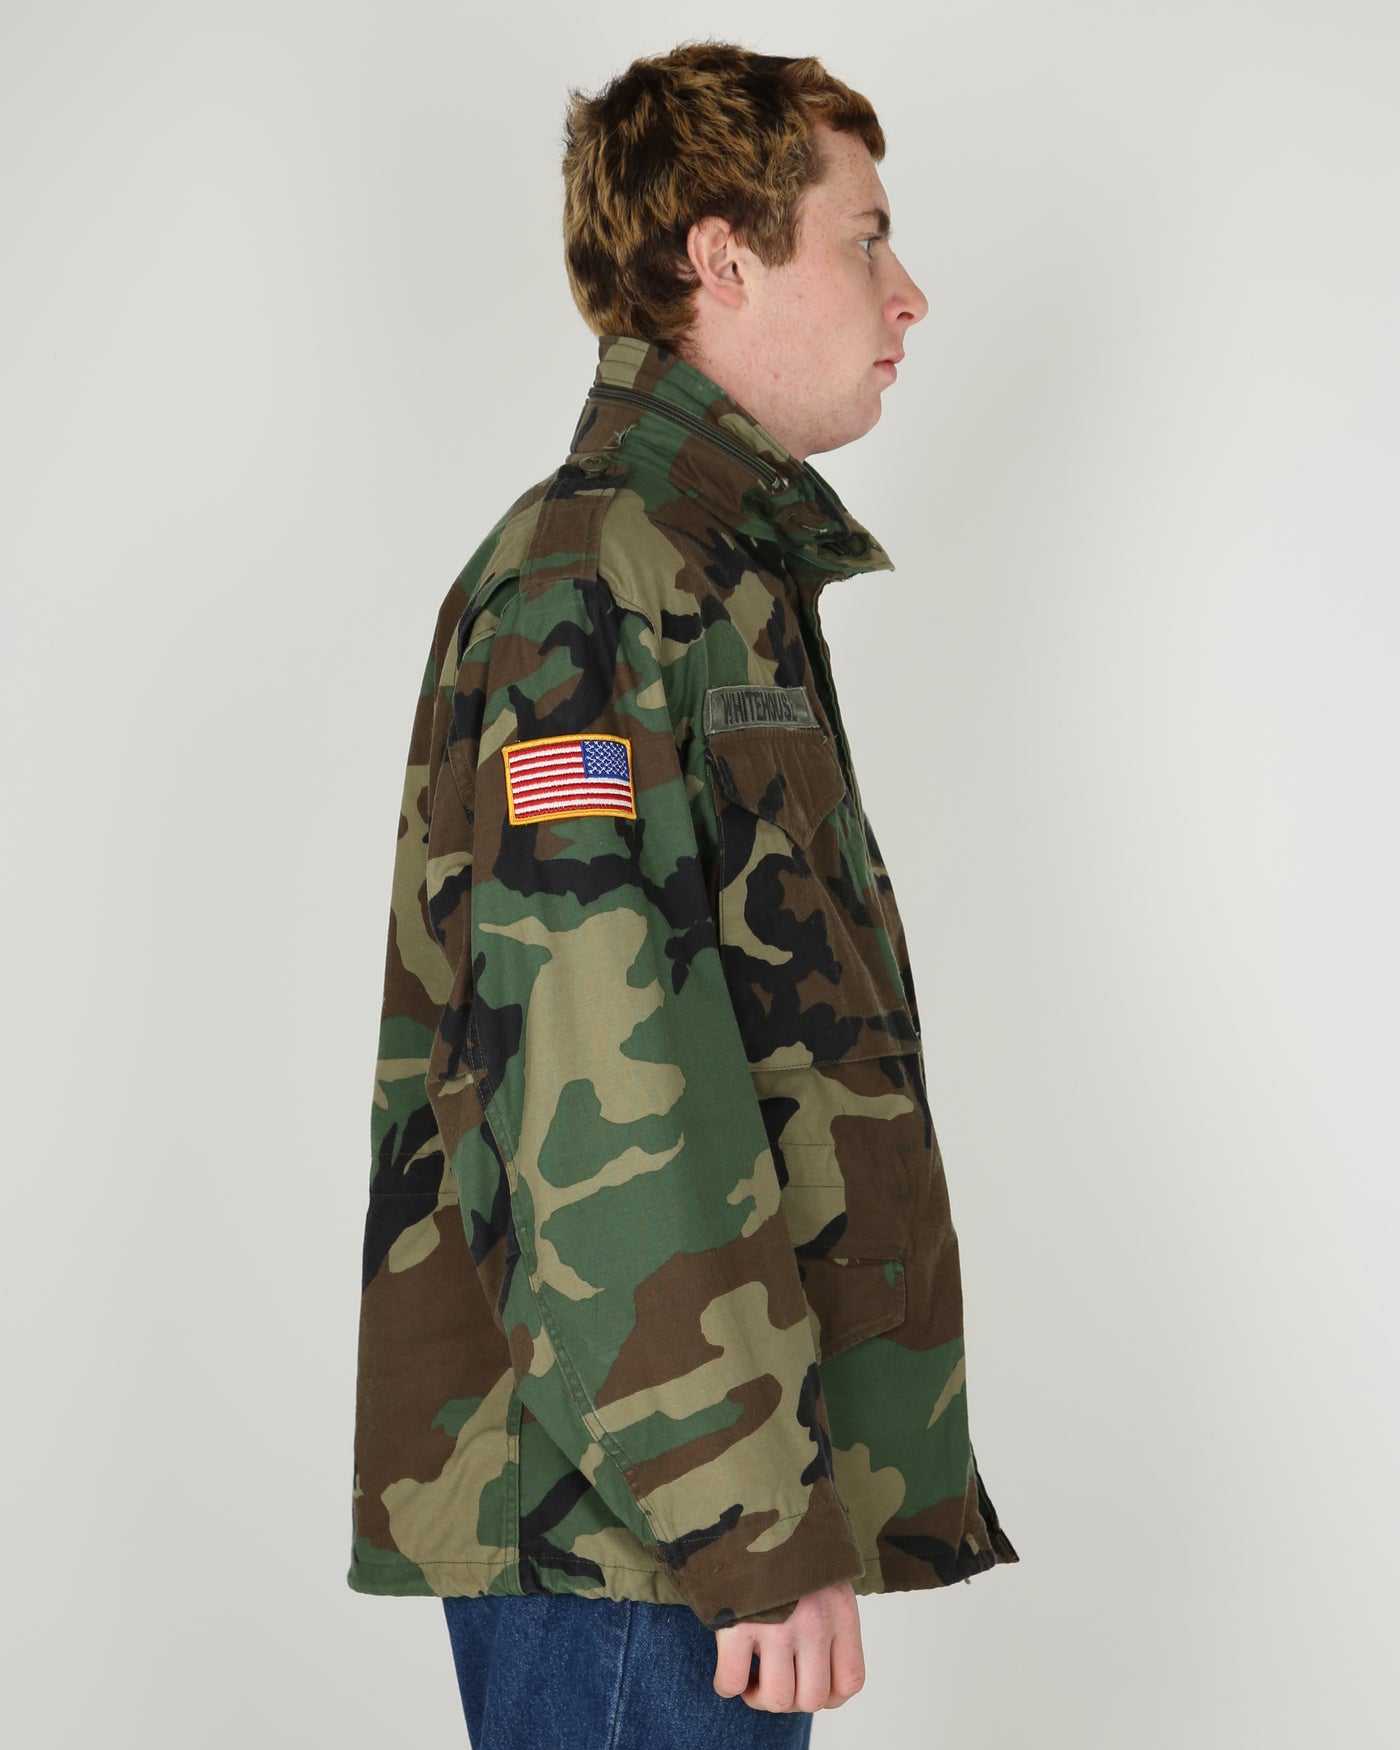 1996 Vintage US Army M-81 Woodland Camouflage M-65 Field Jacket - Medium / Short